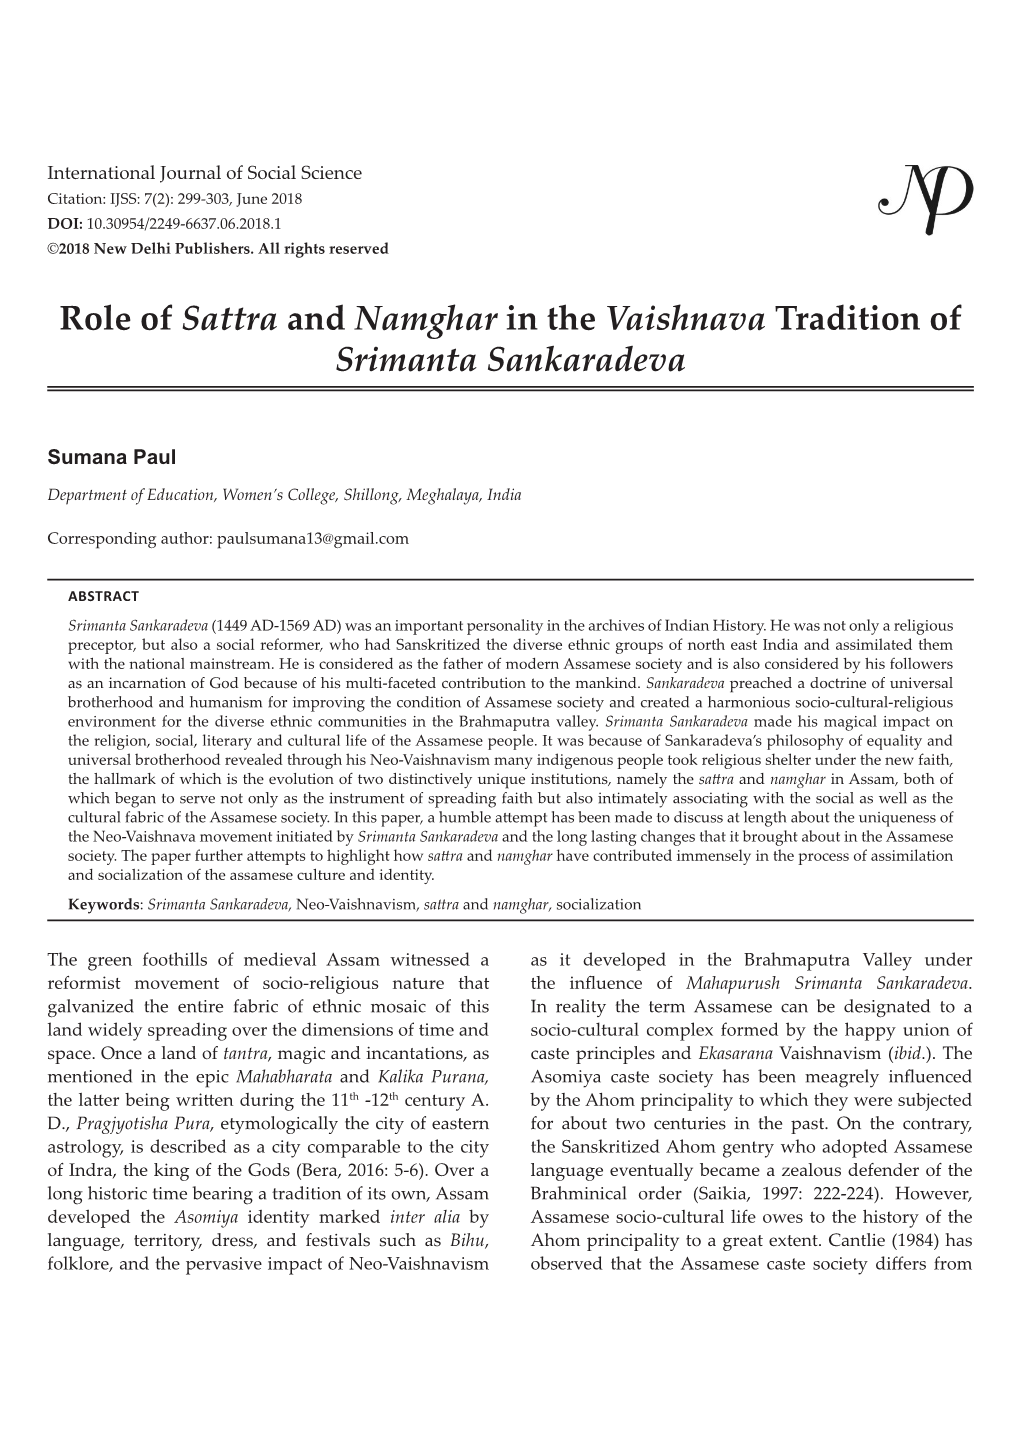 Role of Sattra and Namghar in the Vaishnava Tradition of Srimanta Sankaradeva